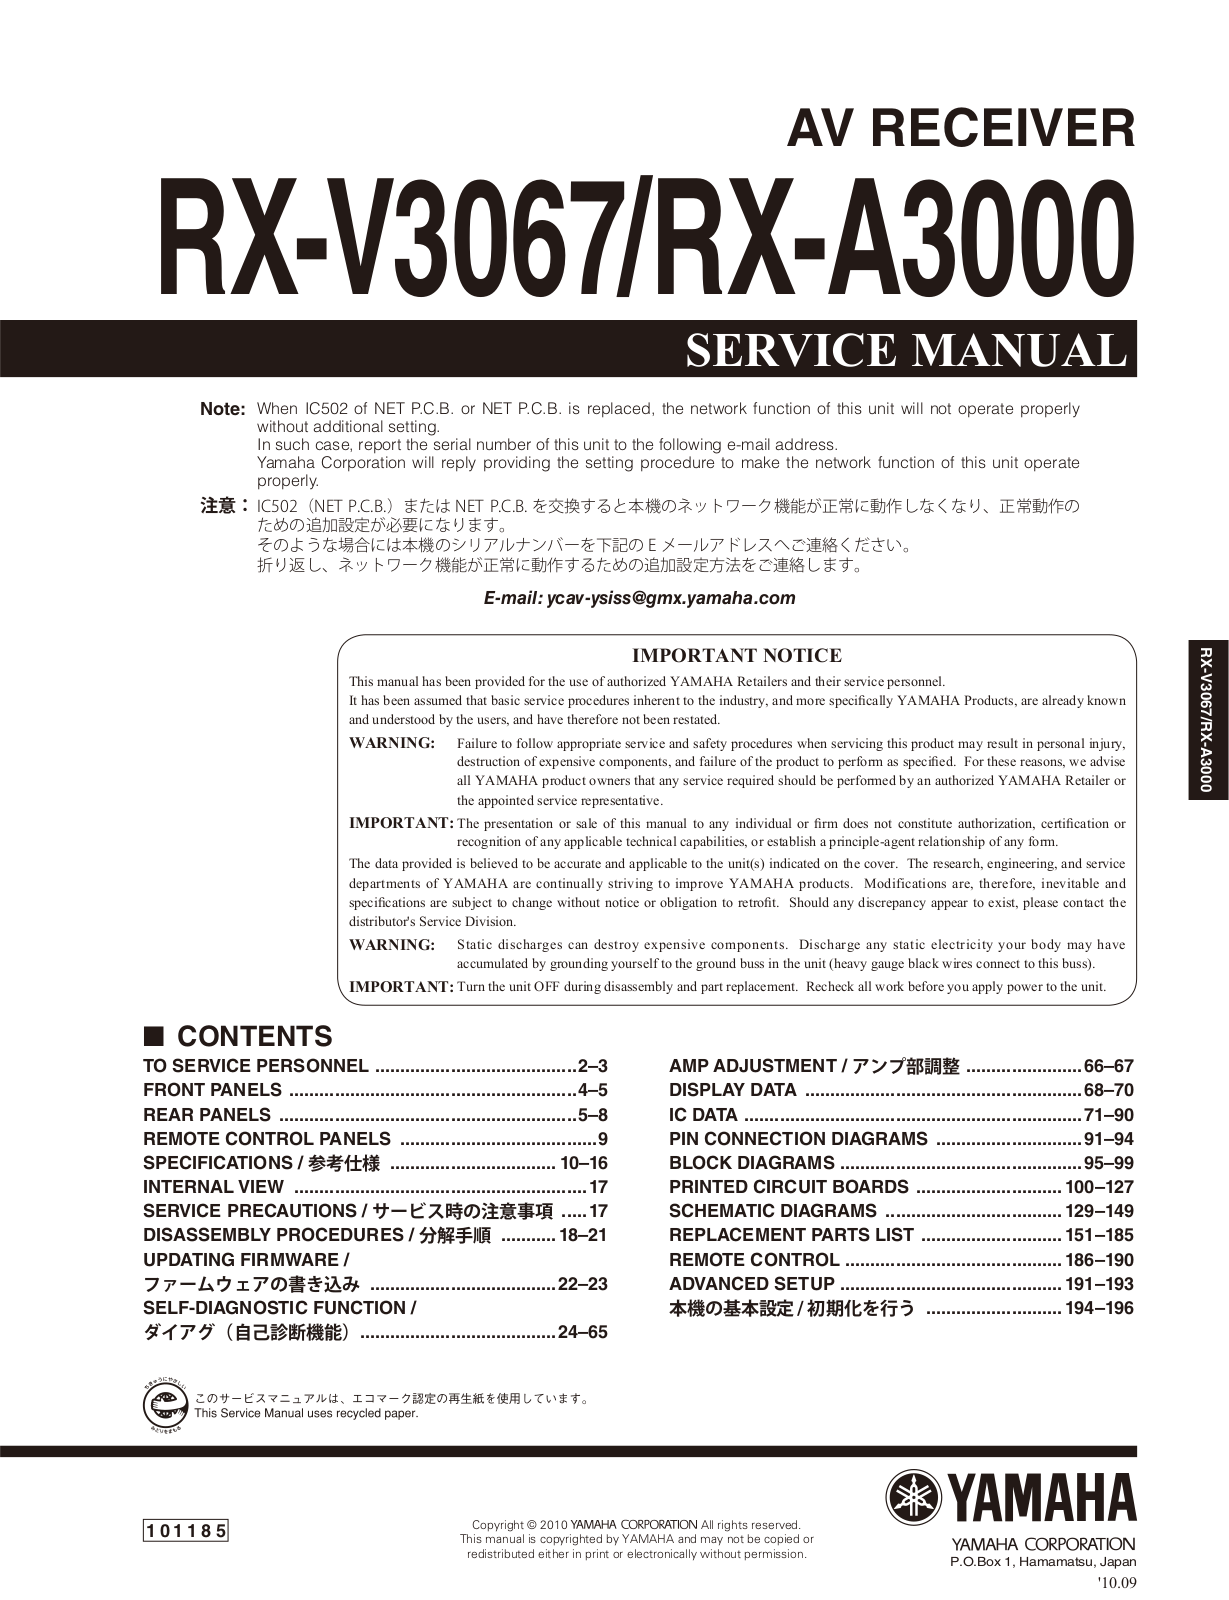 Yamaha RX-V3067, RX-A3000 Service manual